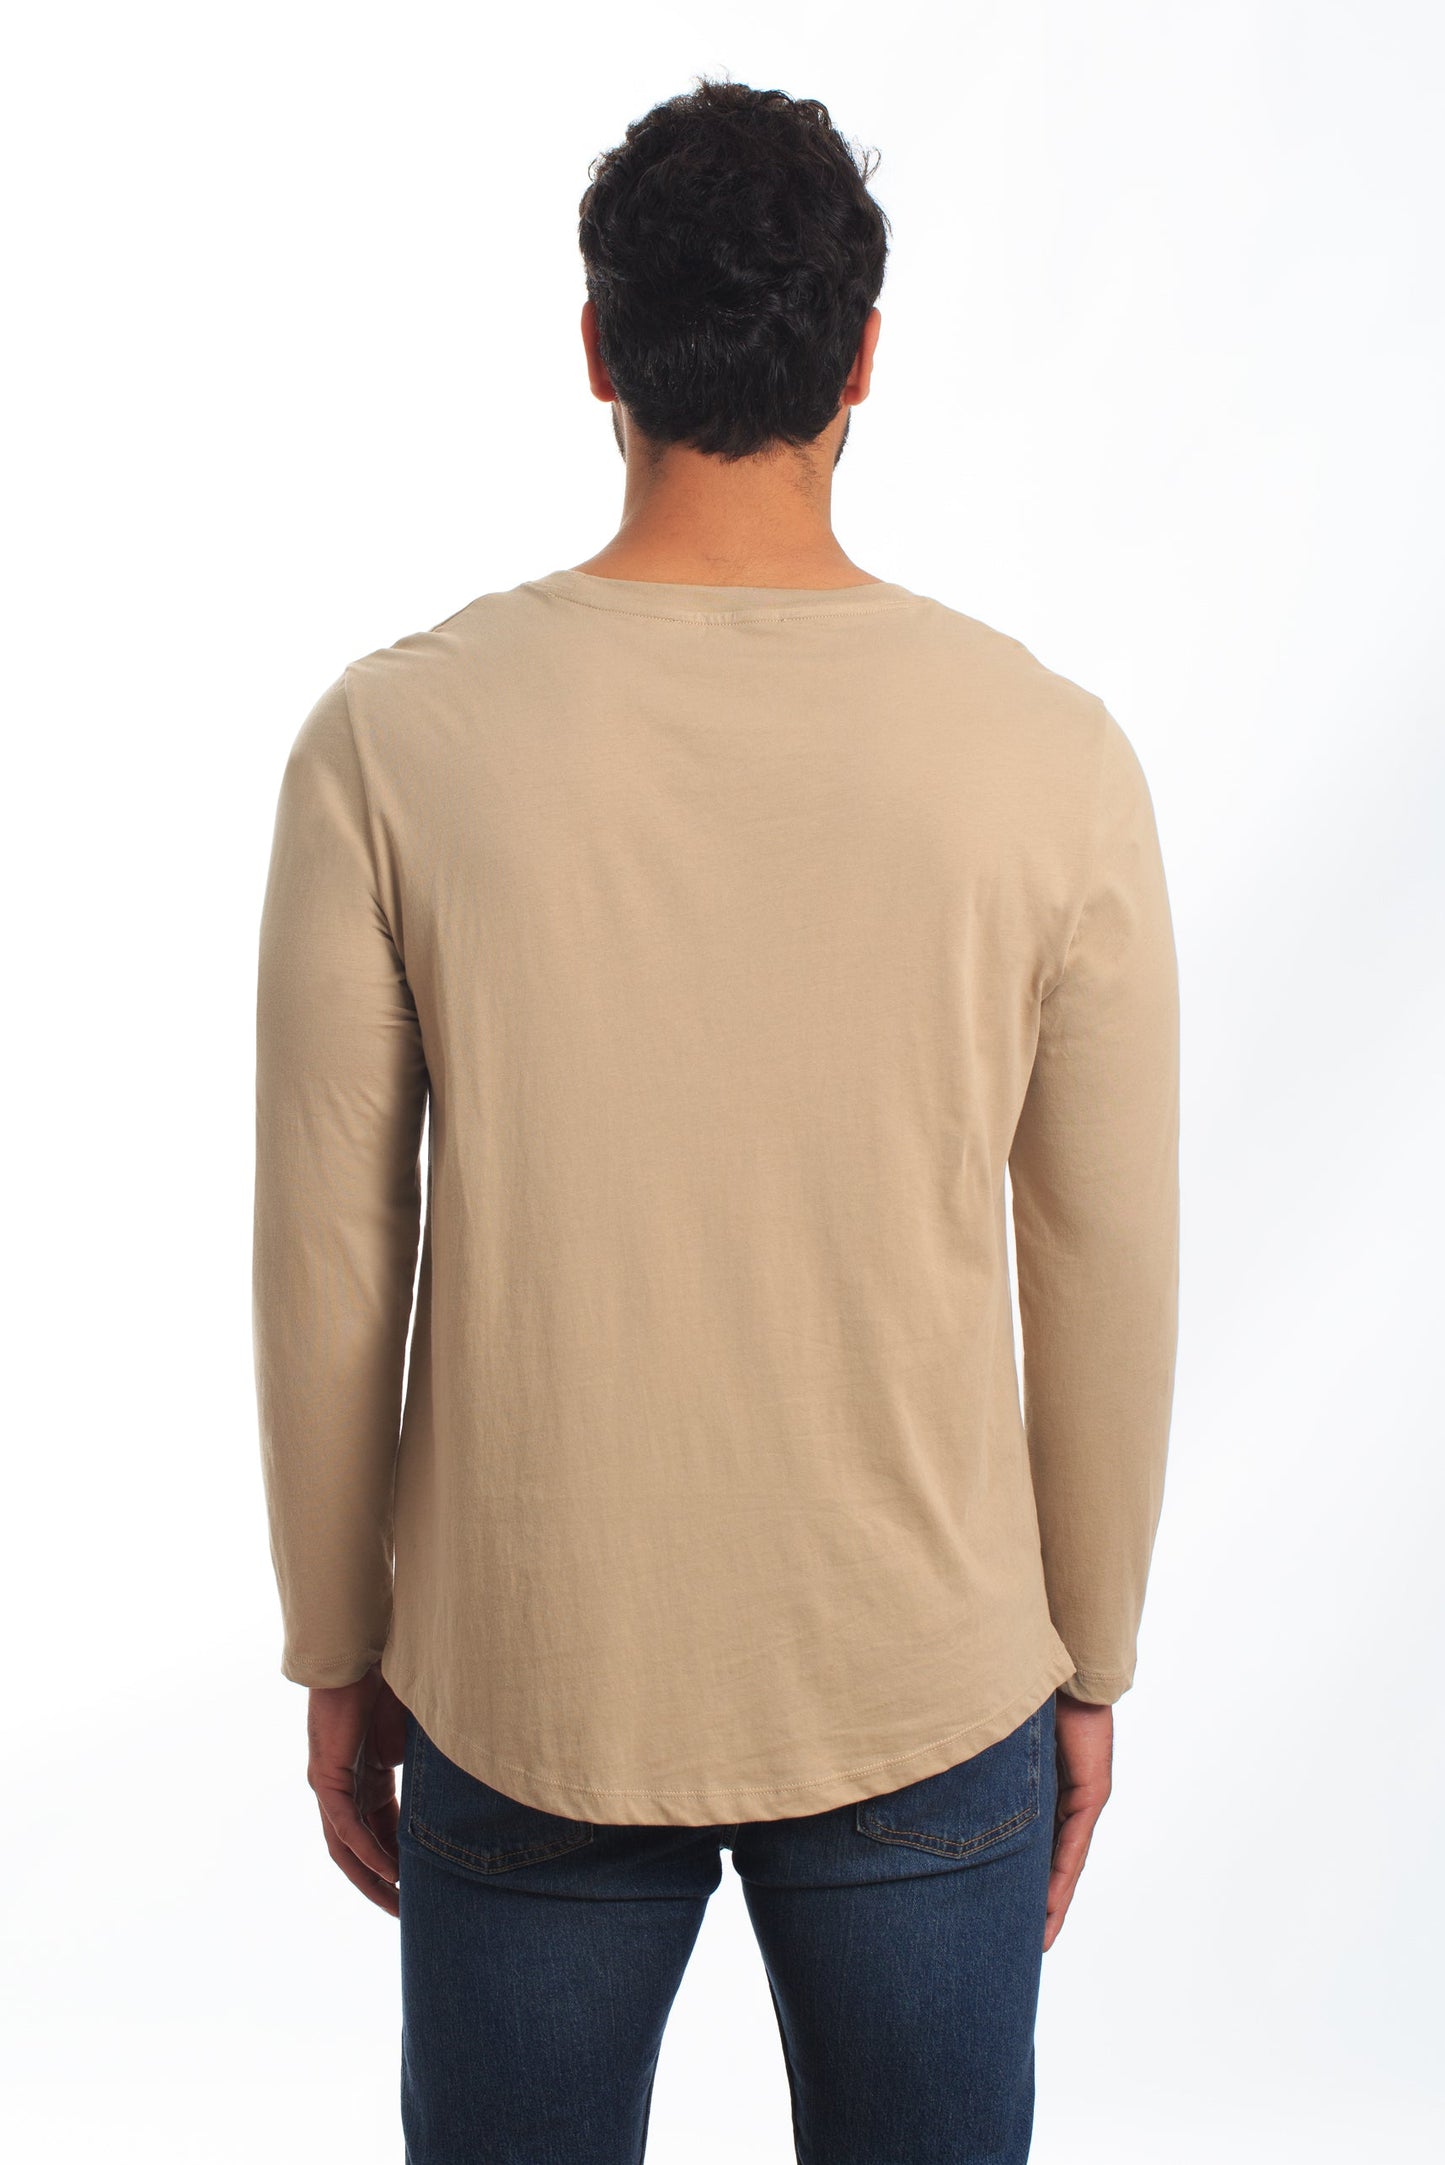 Sand Long Sleeve T-Shirt TEL-111 Back